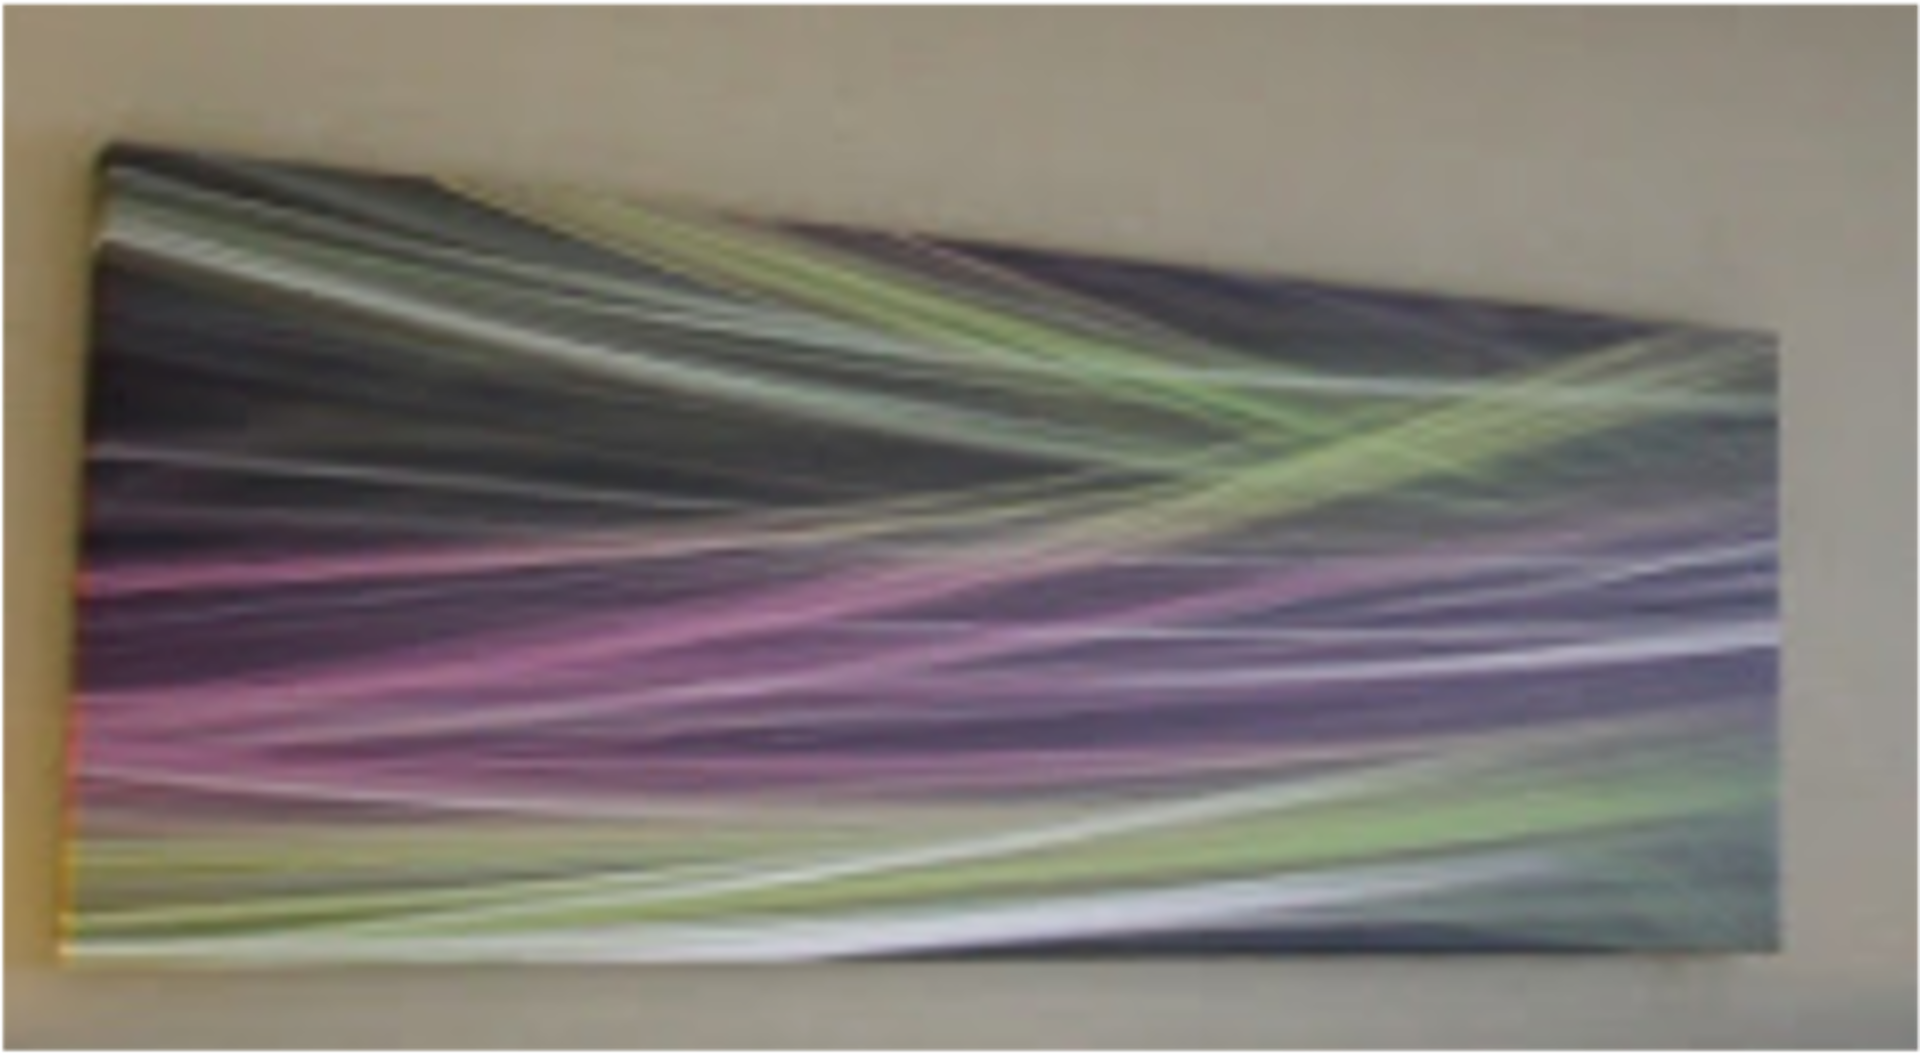 Portobello abstract canvas artwork panel 1500 x 600mm (FM36AP1) - Image 2 of 2